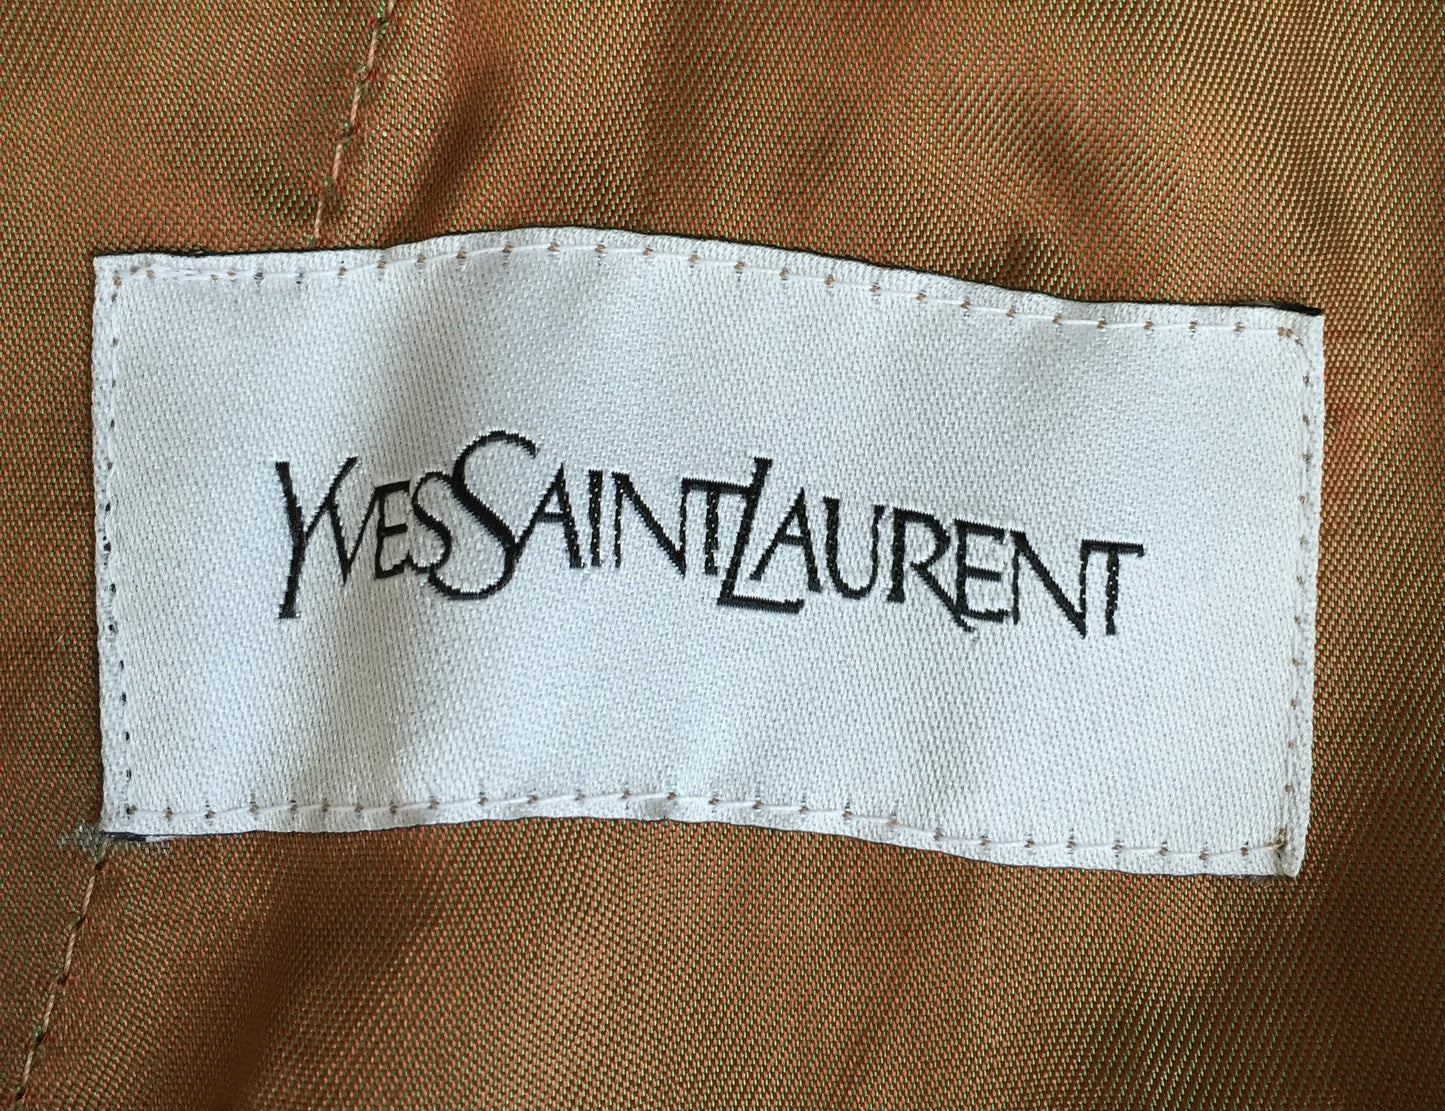 Yves Saint Laurent - Distressed Tan Leather Bomber Jacket